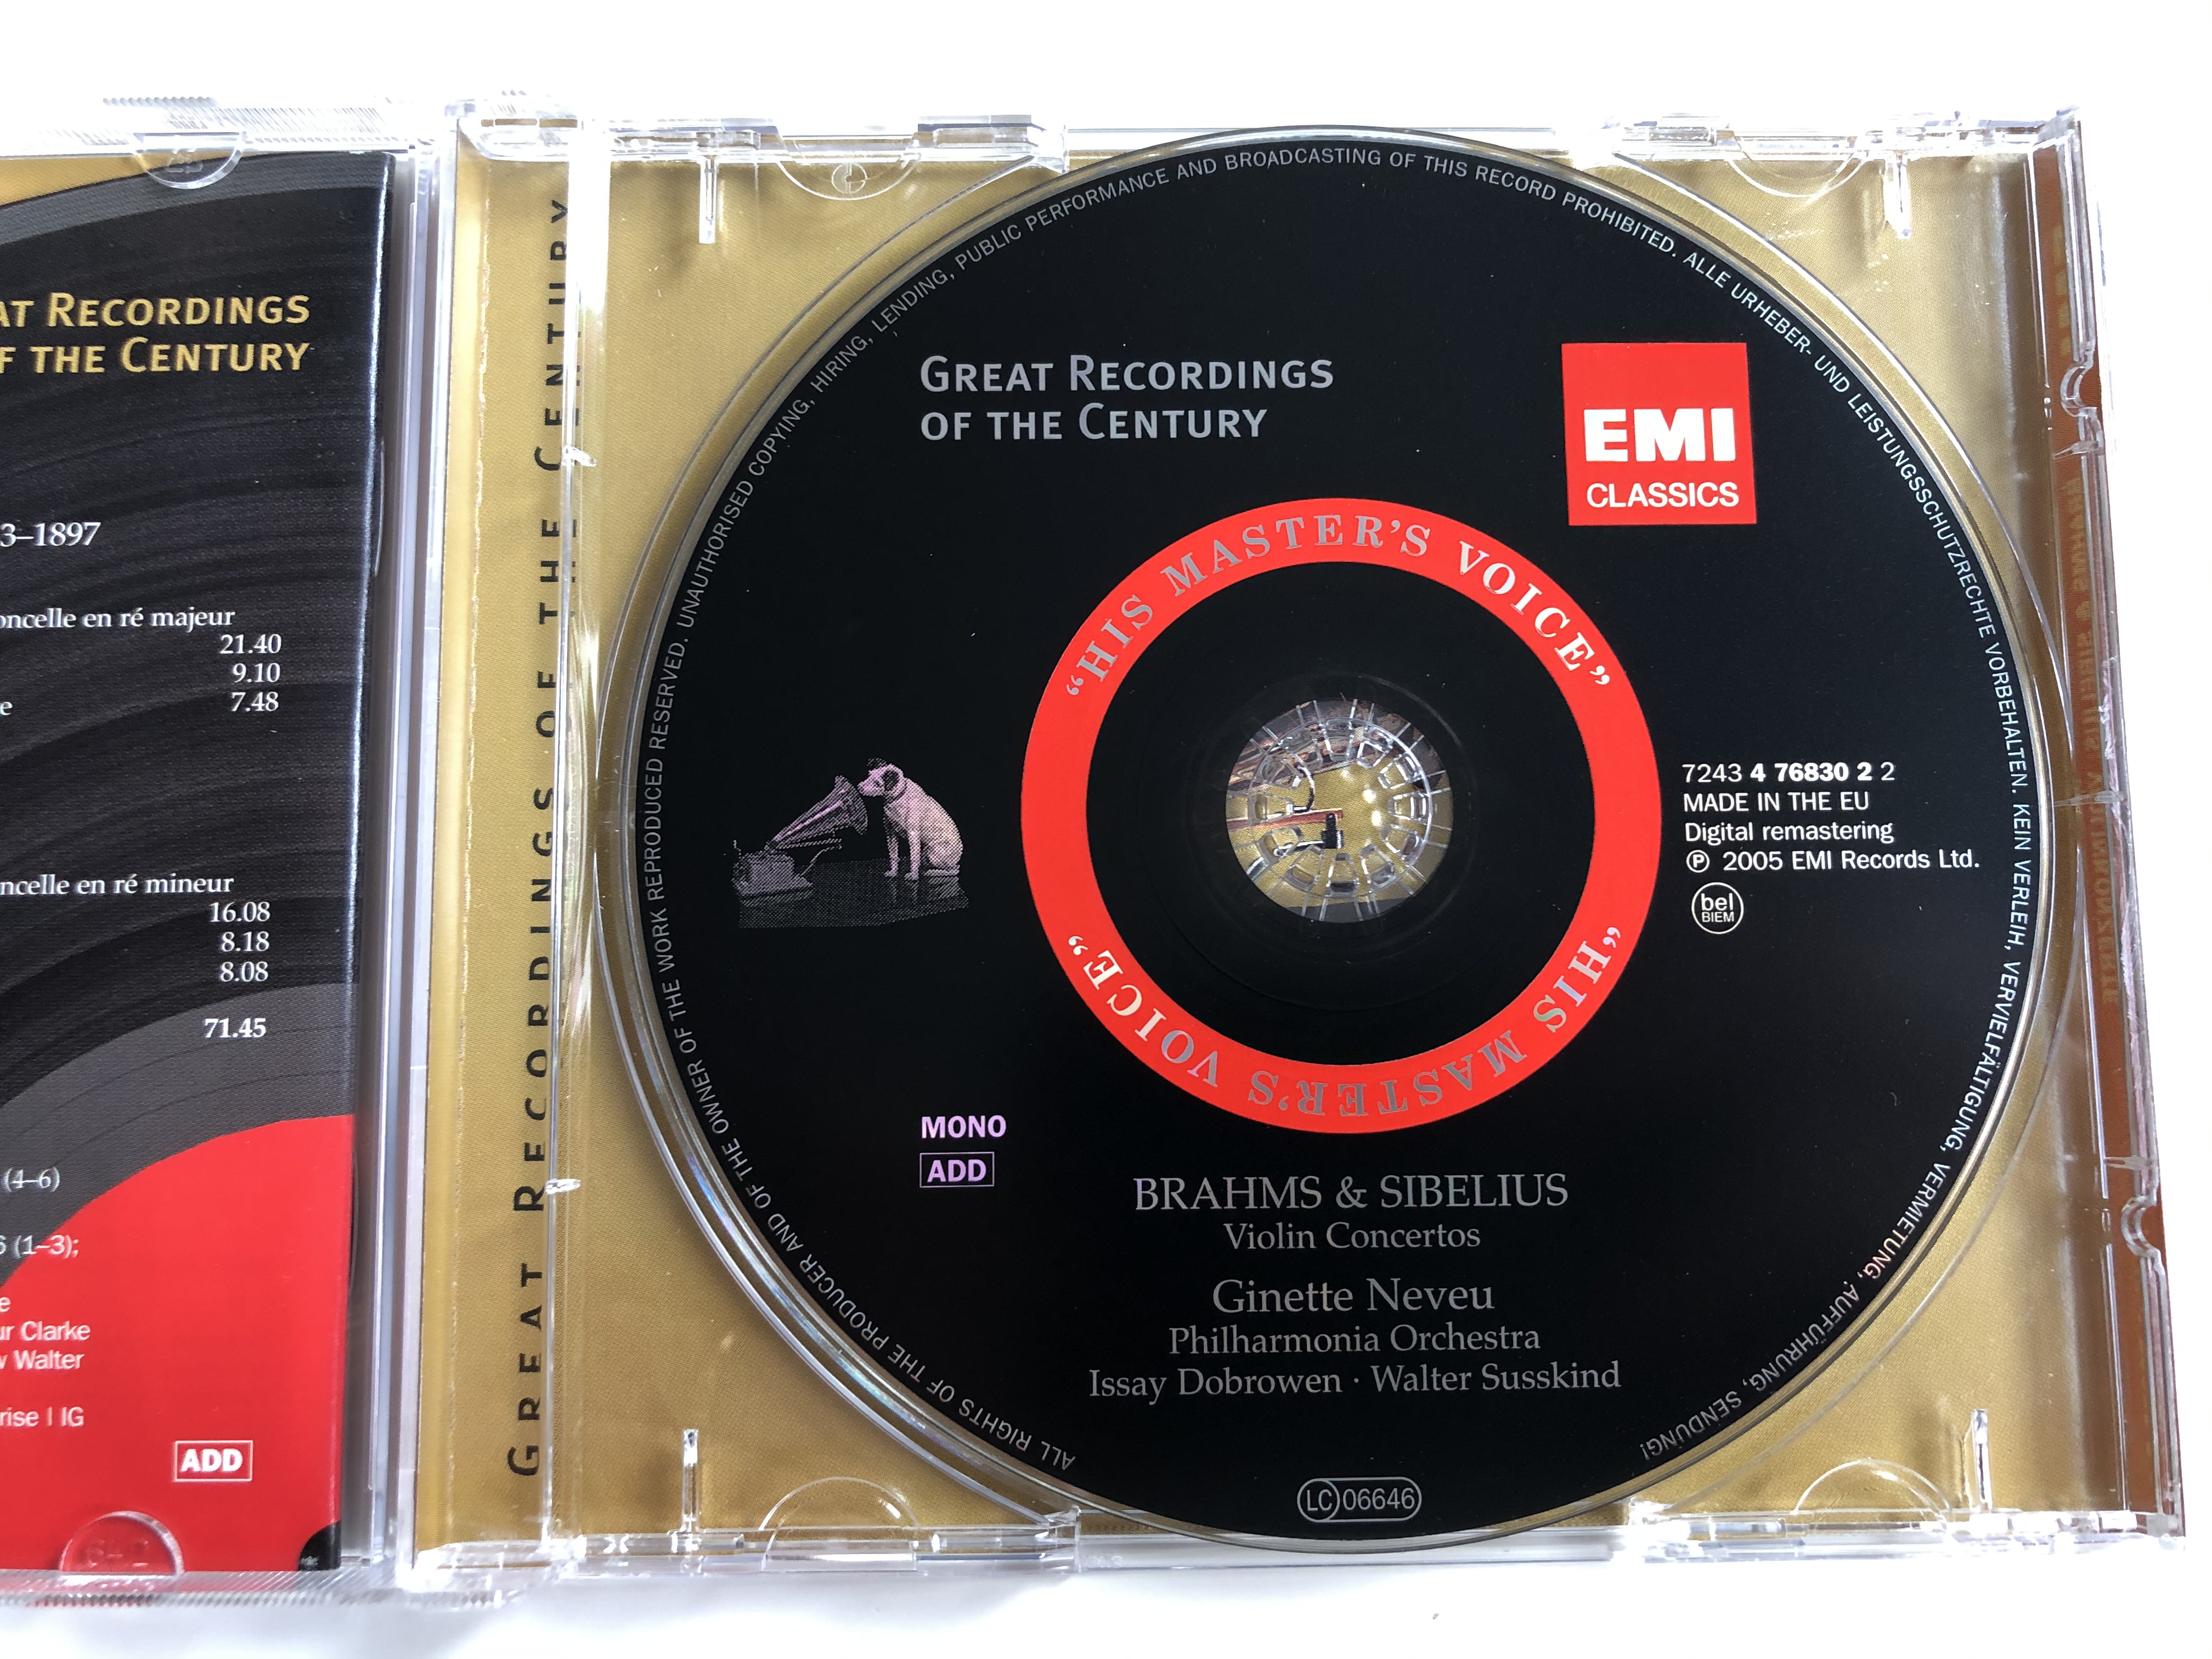 brahms-sibelius-violin-concertros-ginette-neveu-issay-dobrowen-walter-susskind-philharmonia-orchestra-emi-classics-audio-cd-2005-mono-7243-4-76830-2-2-4-.jpg